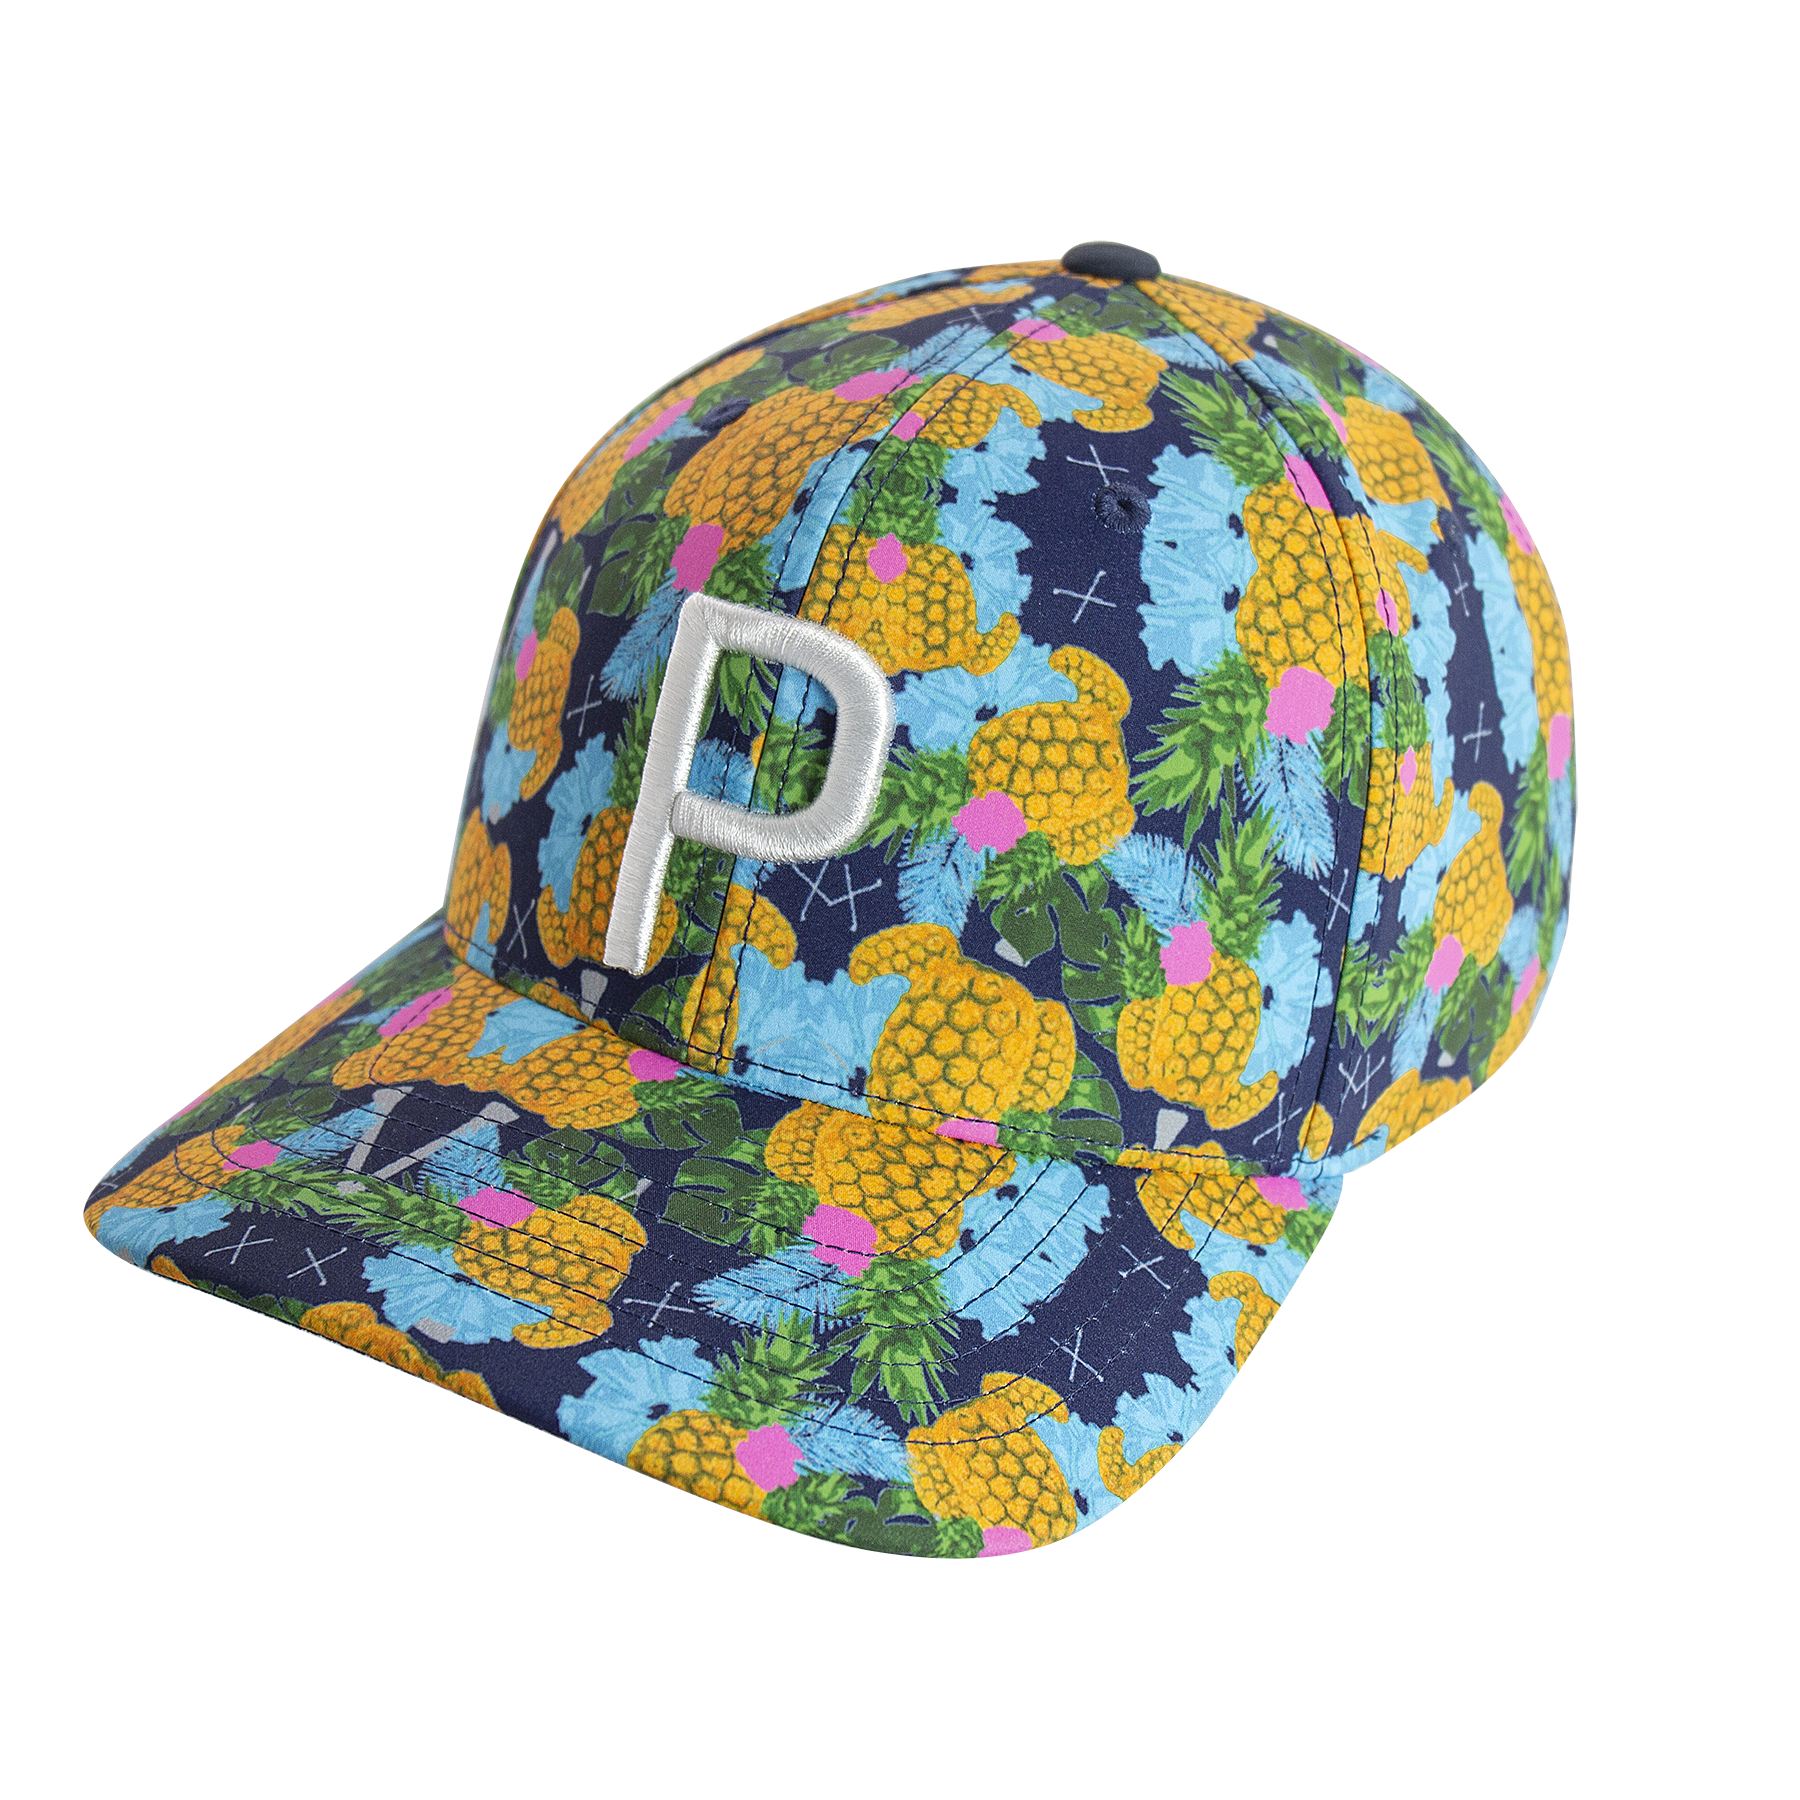 puma golf pineapple hat